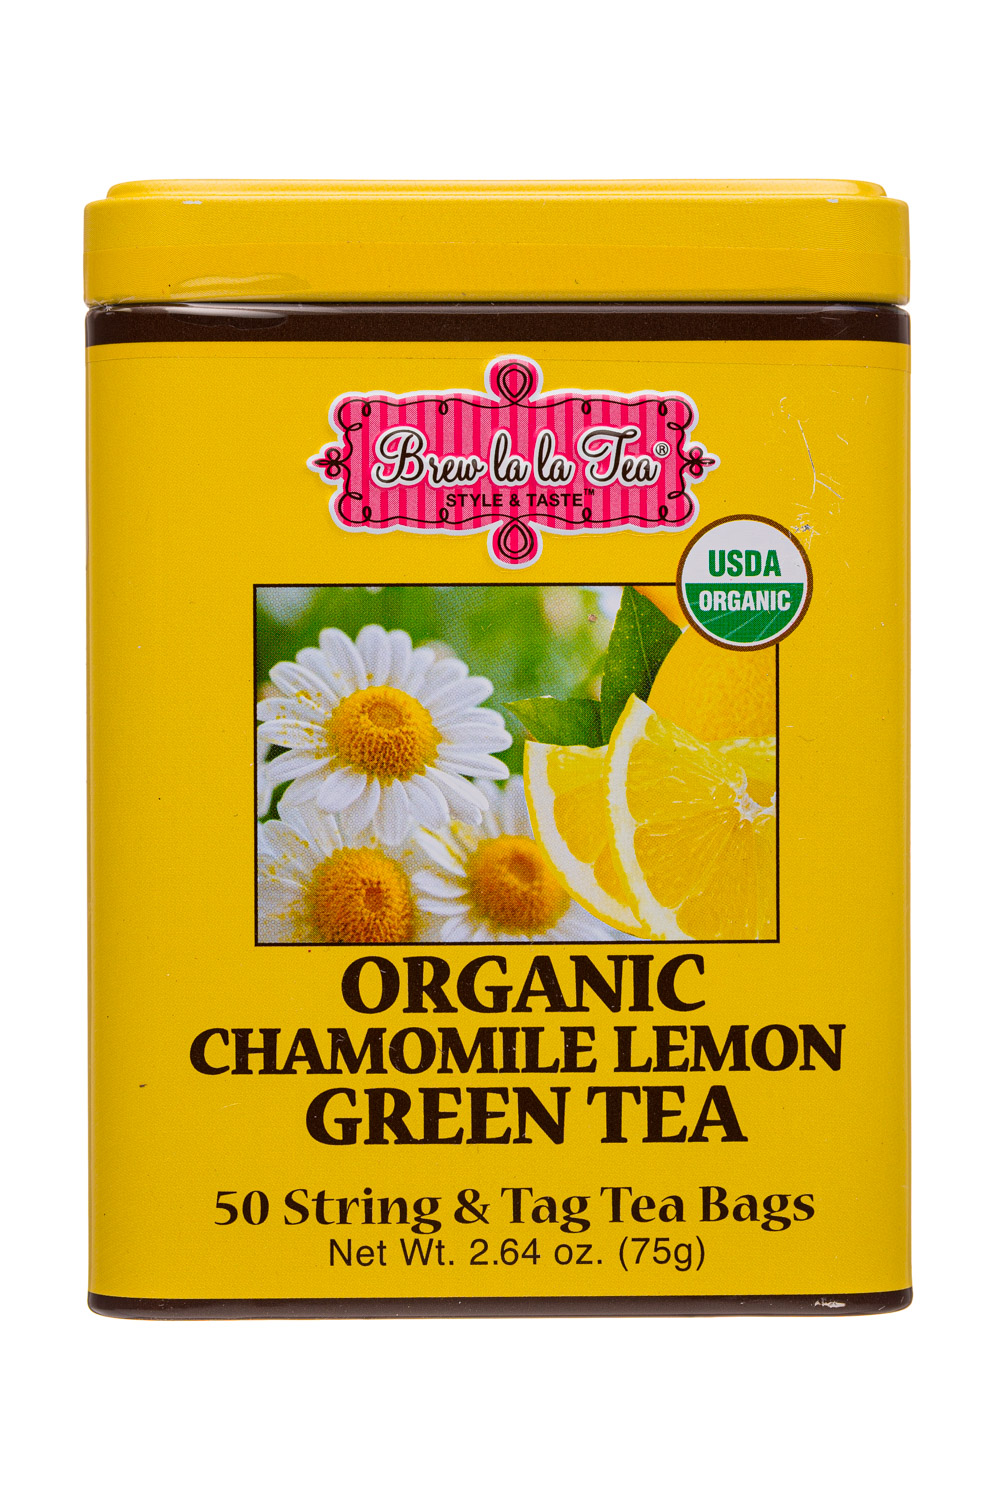 https://images.nosh.com/brands/235940789.brewlalatea-75g-2020-greentea-chamomilelemon.jpg